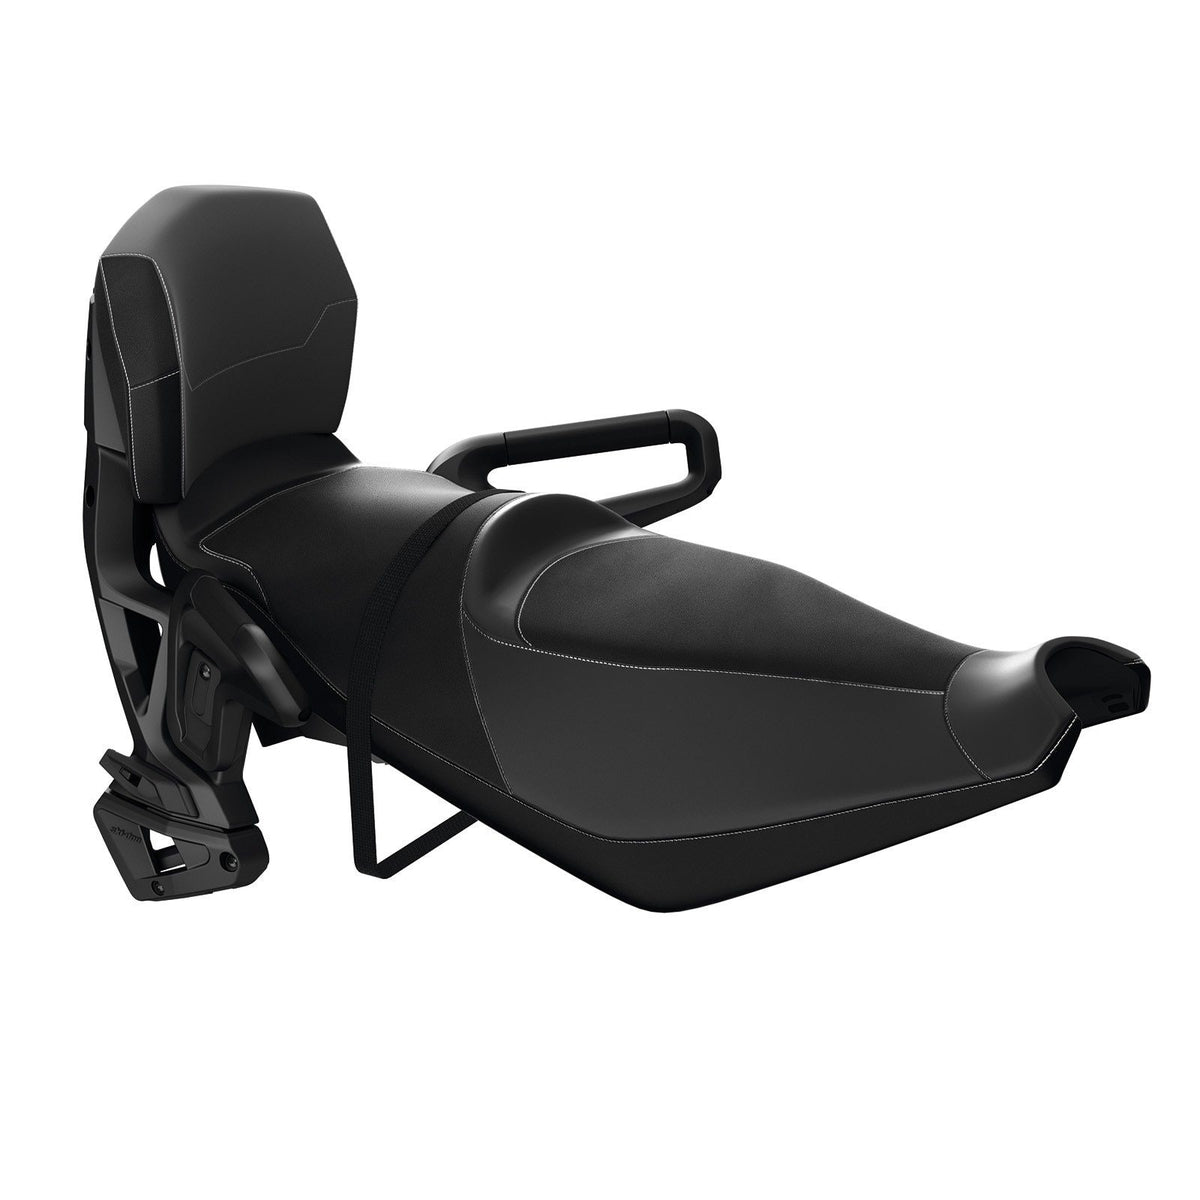 Ski-Doo LinQ 1 + 1 Seat System | REV Gen4